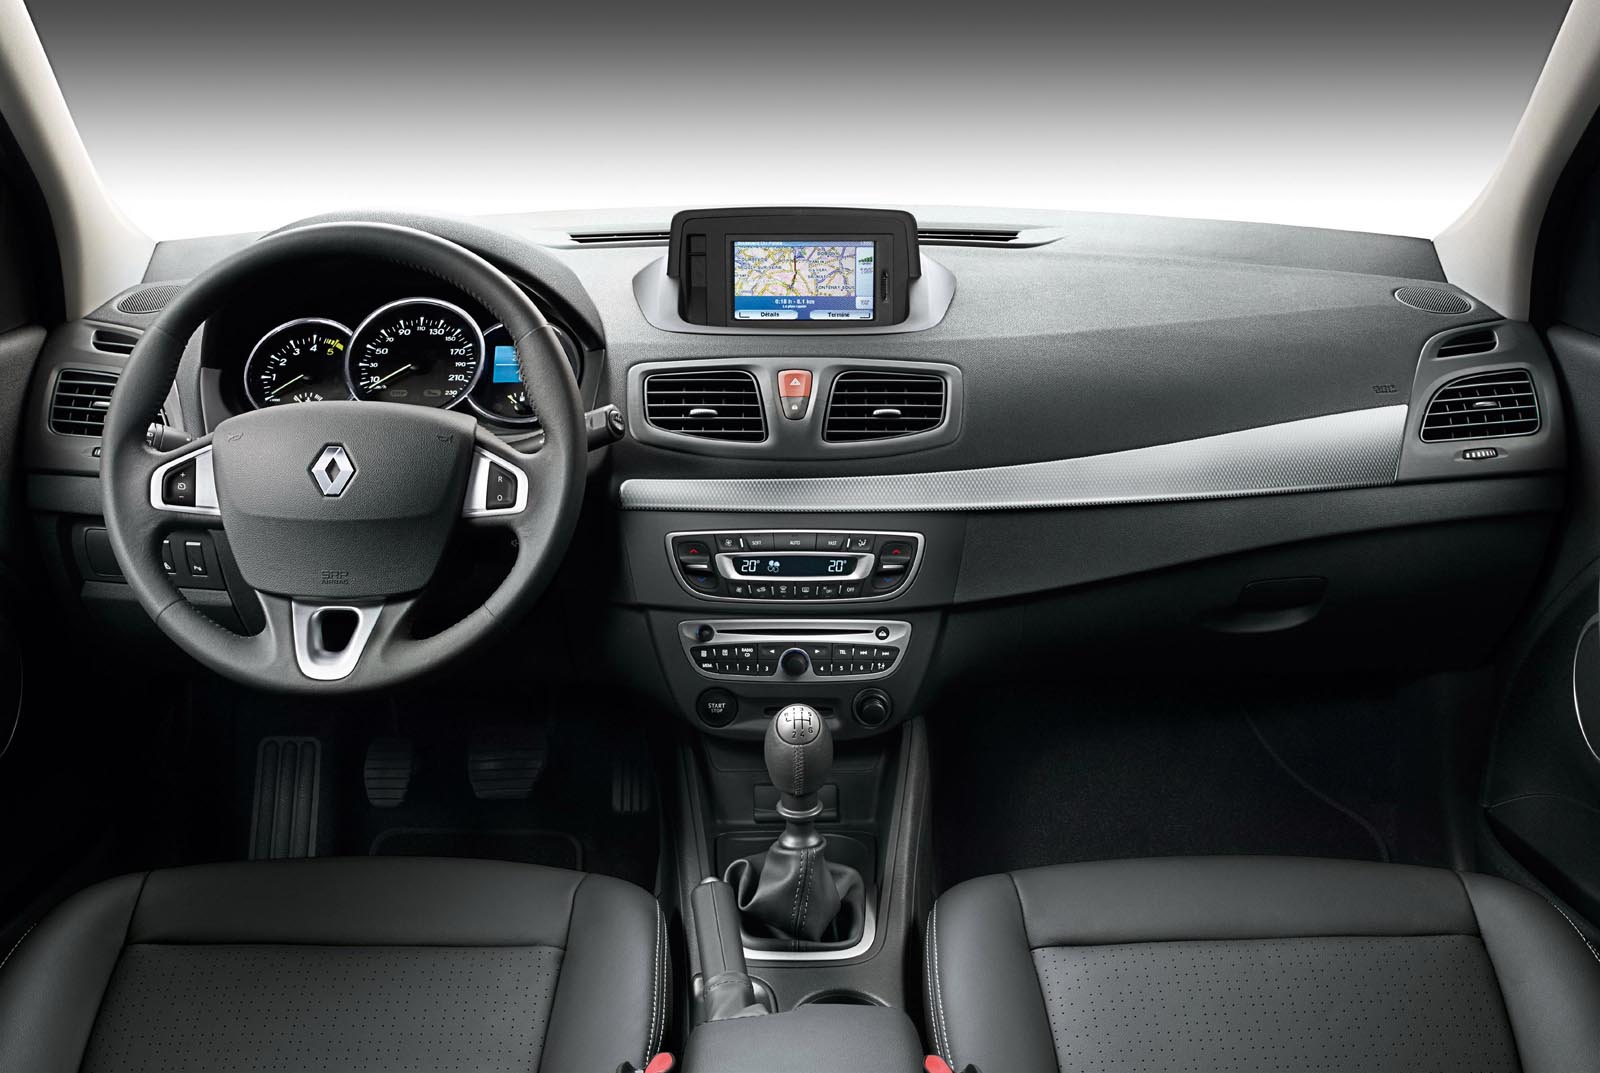 Renault Fluence - interior